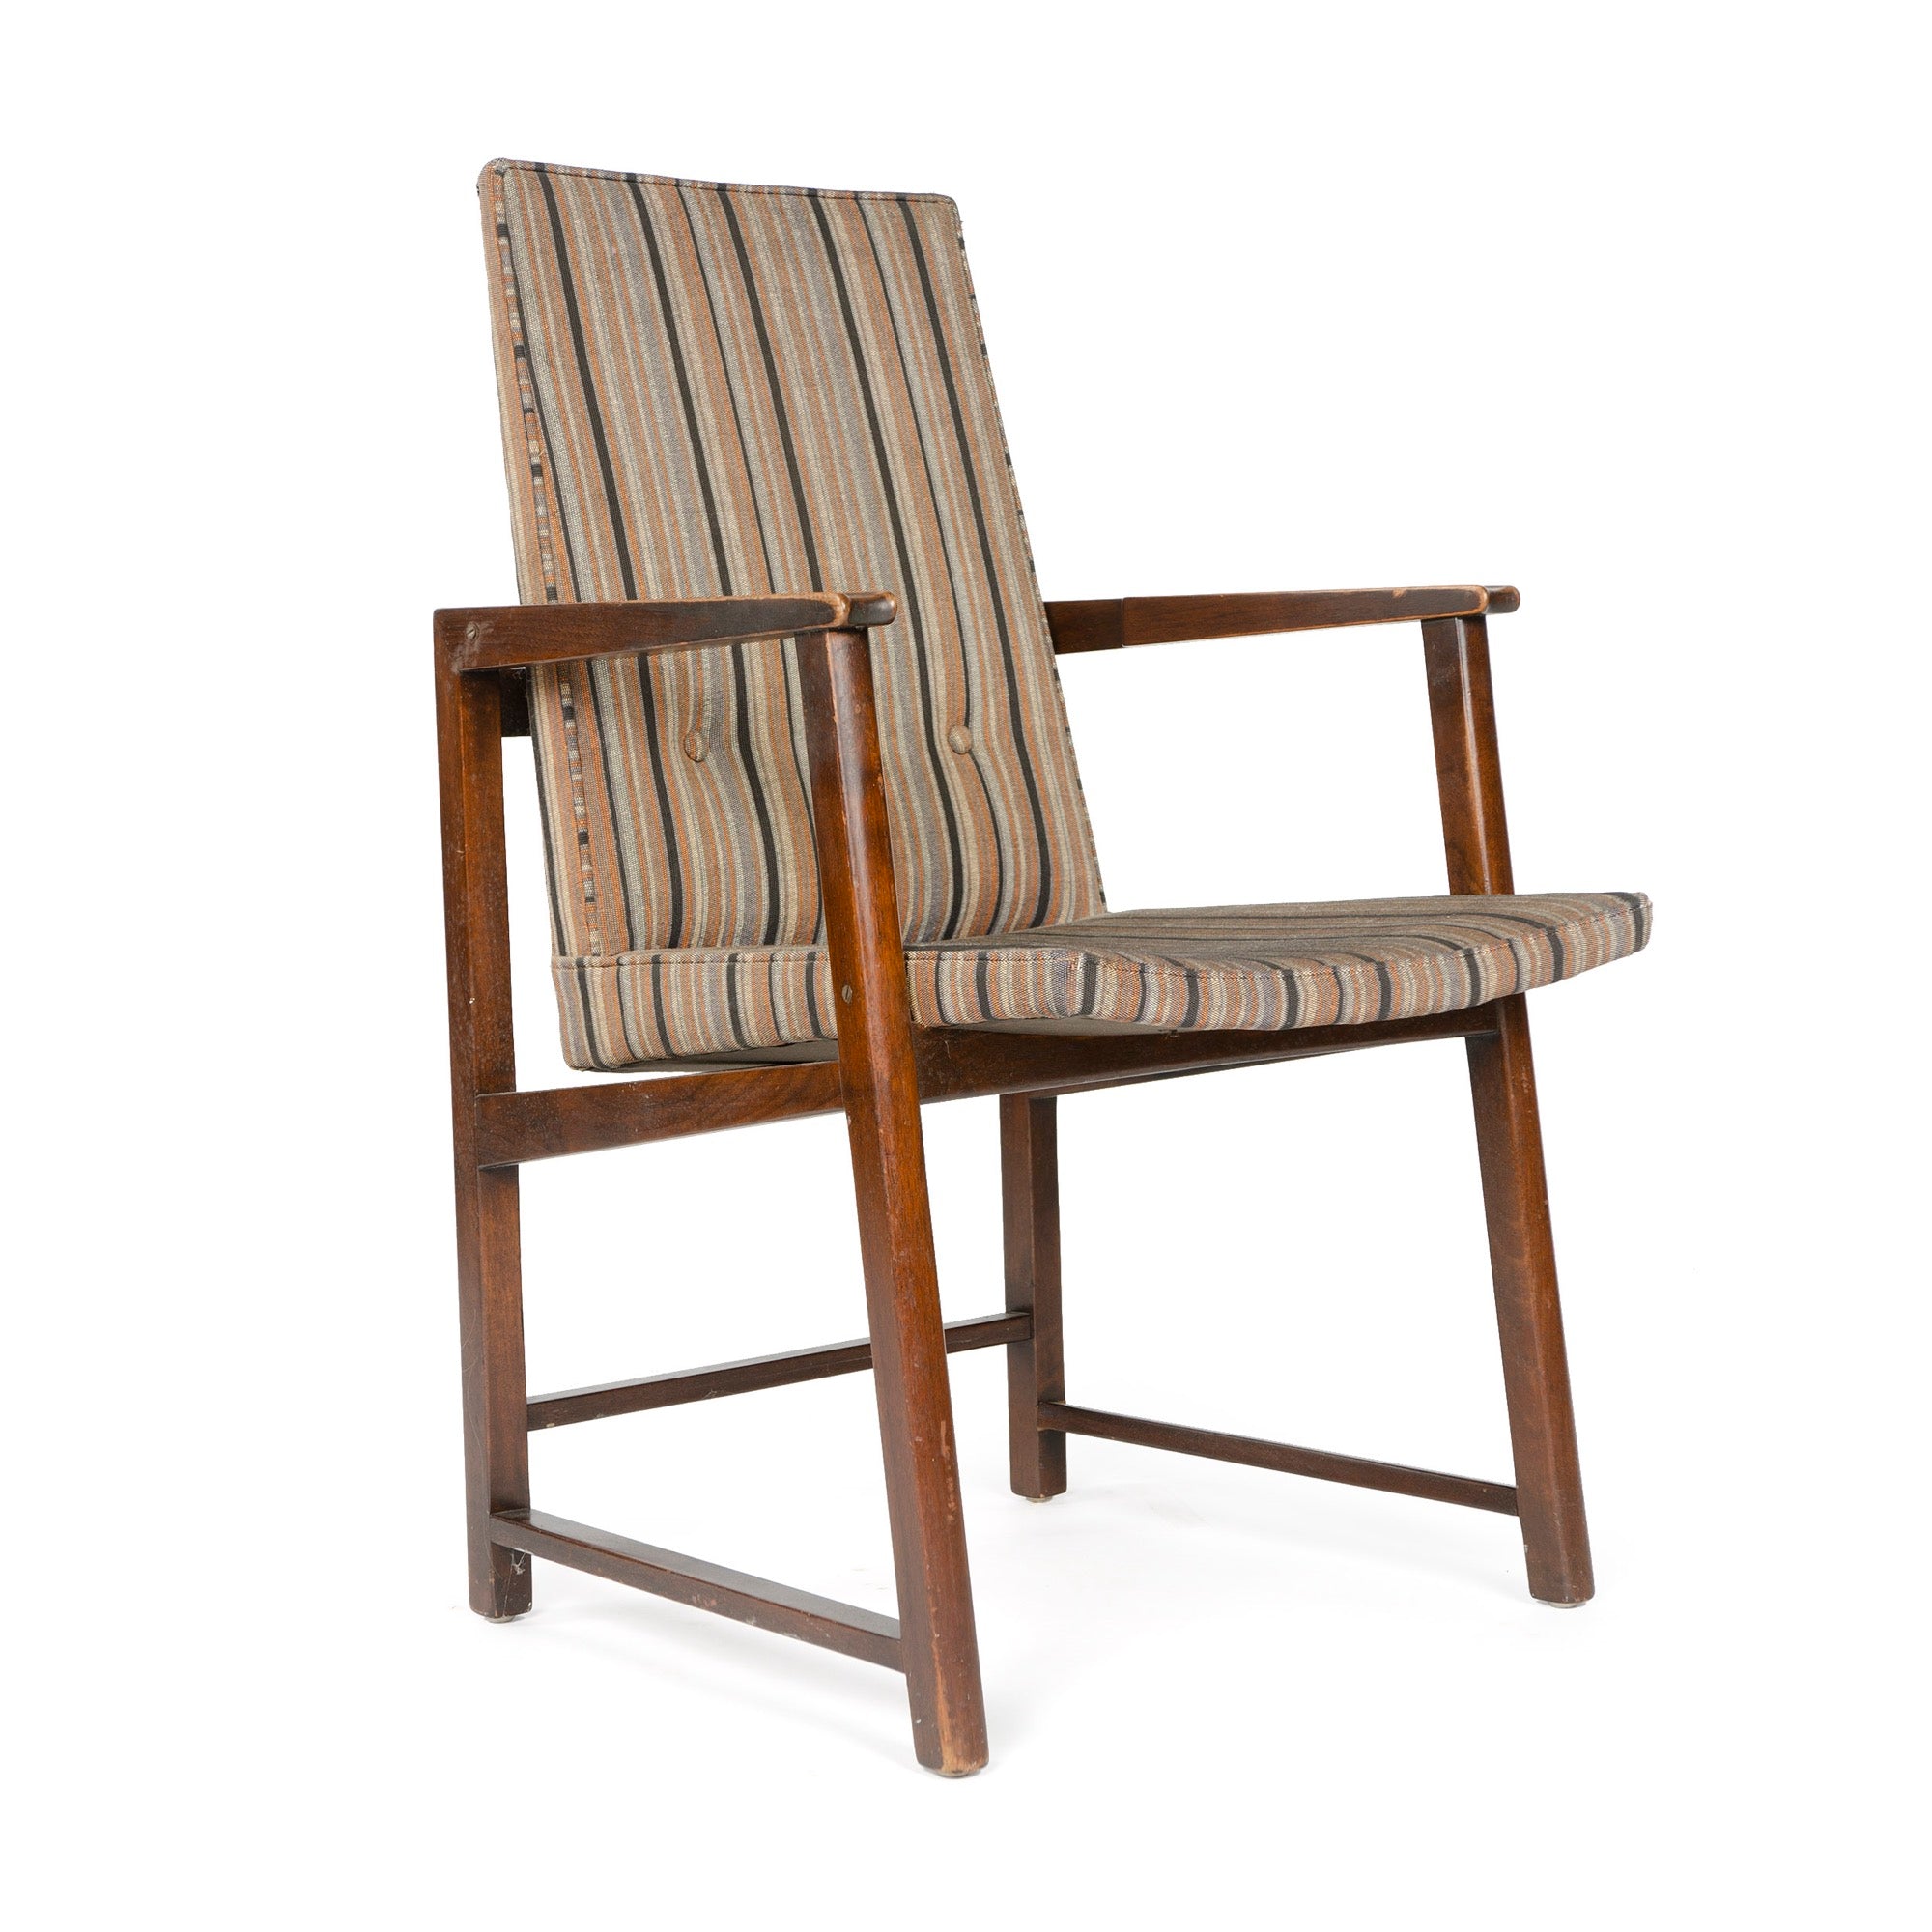 Rare Walnut Arm Chair by Edward Wormley for Dunbar, 1950's